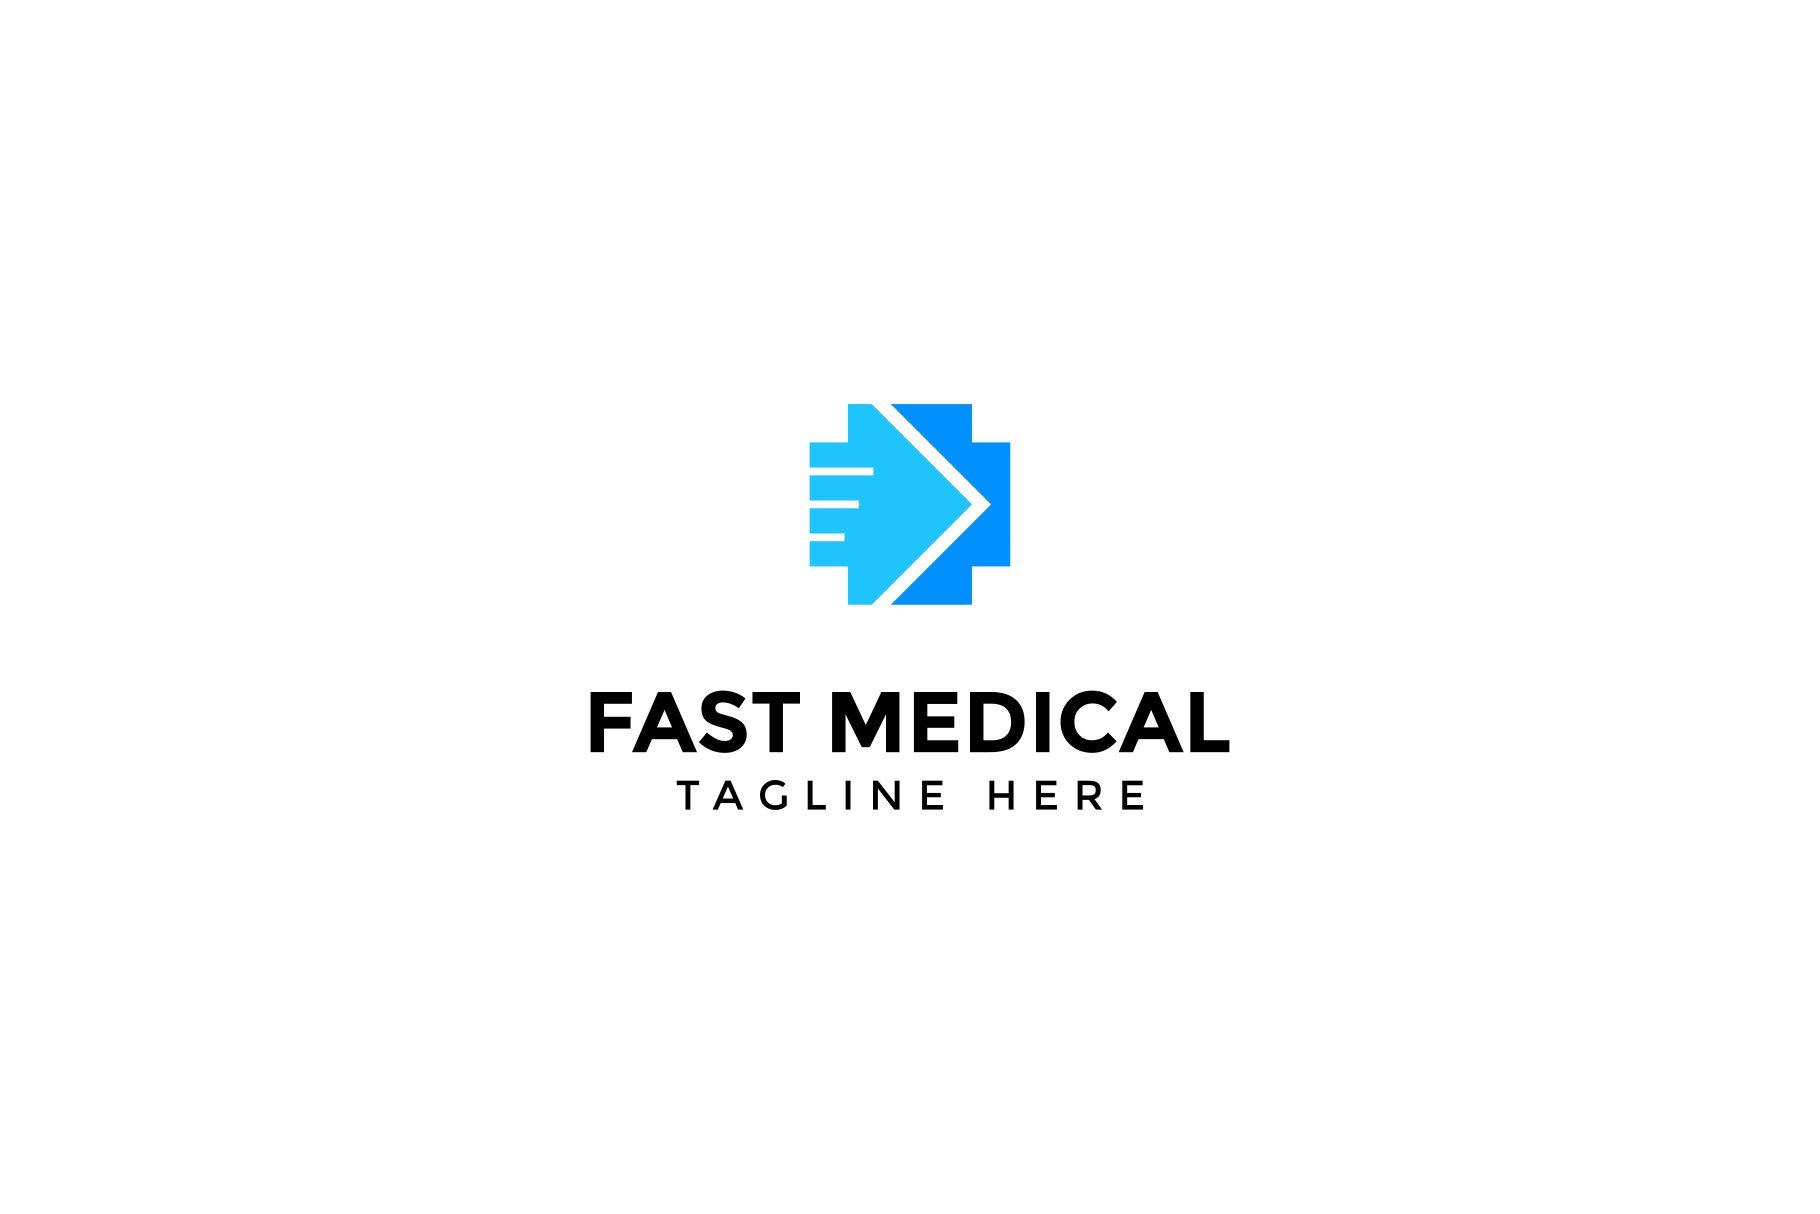 Medical Health Logo for Hospital cover image.